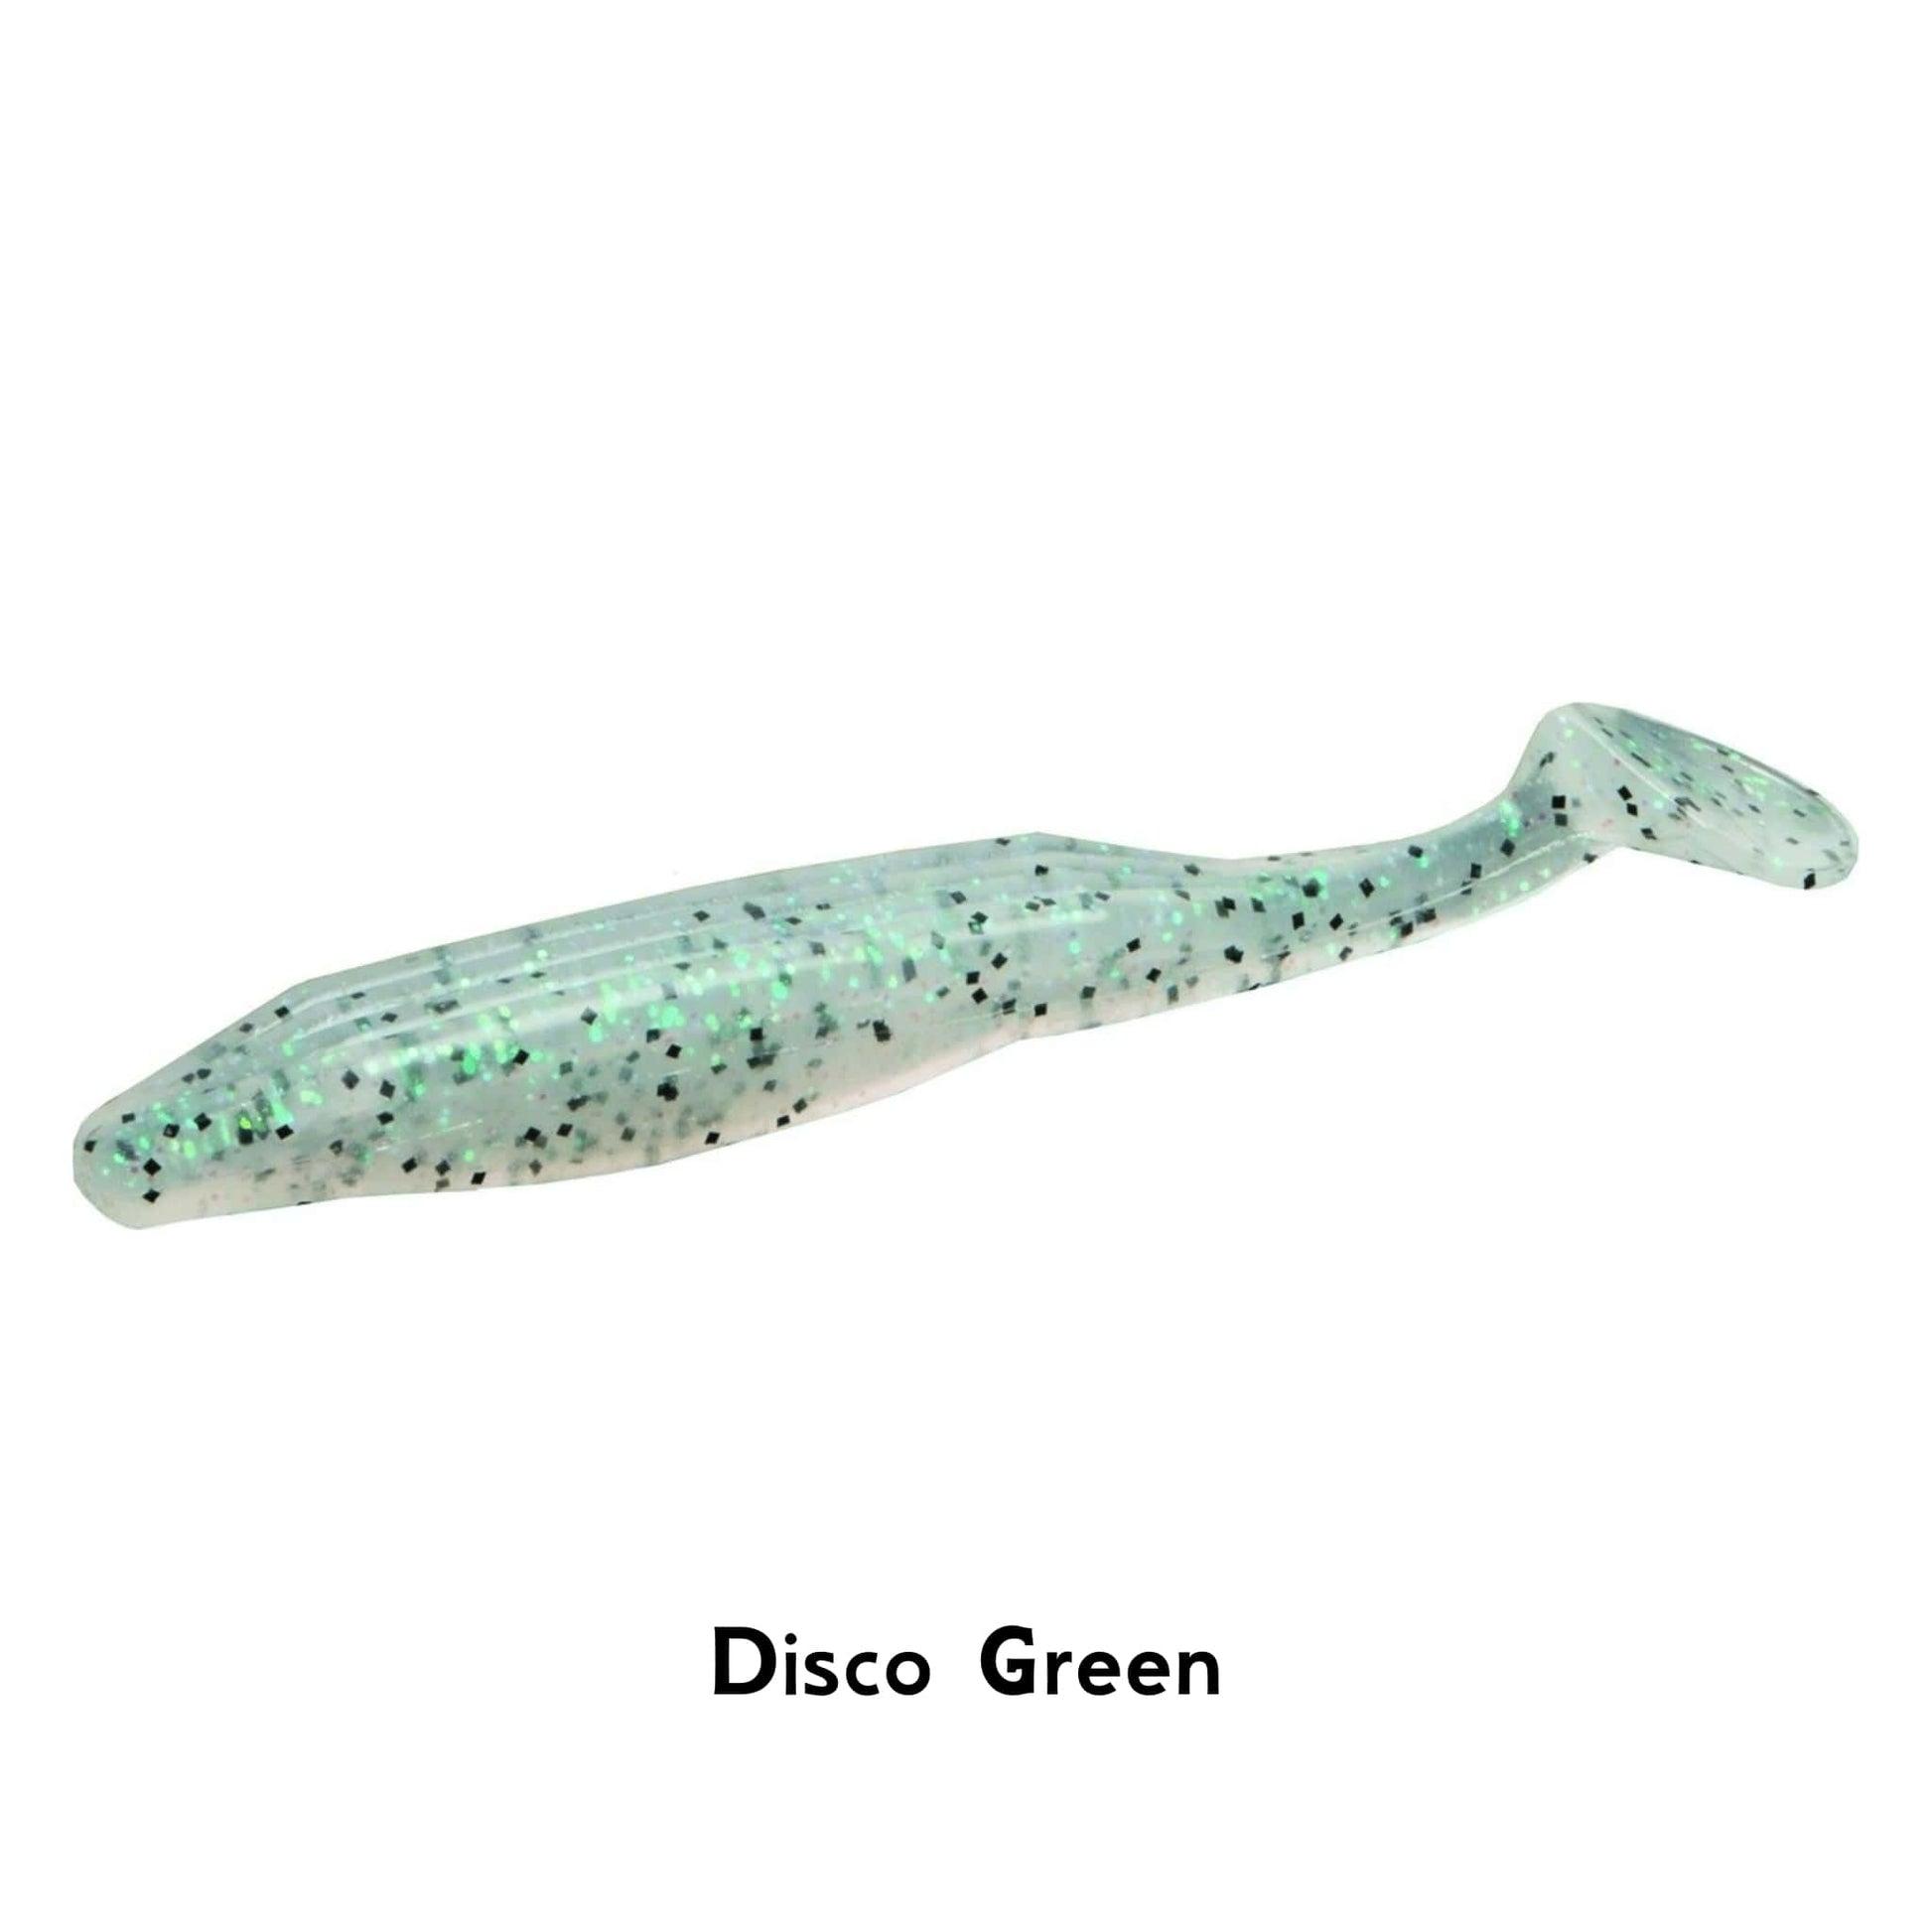 Zoom Swimmin Super Fluke Disco Green 4 Inch 5pcs Soft Bait Fishing Lure ALL COLOURS Paddle Tail Jig Dropshot Lure Texas Carolina Rig Cheb